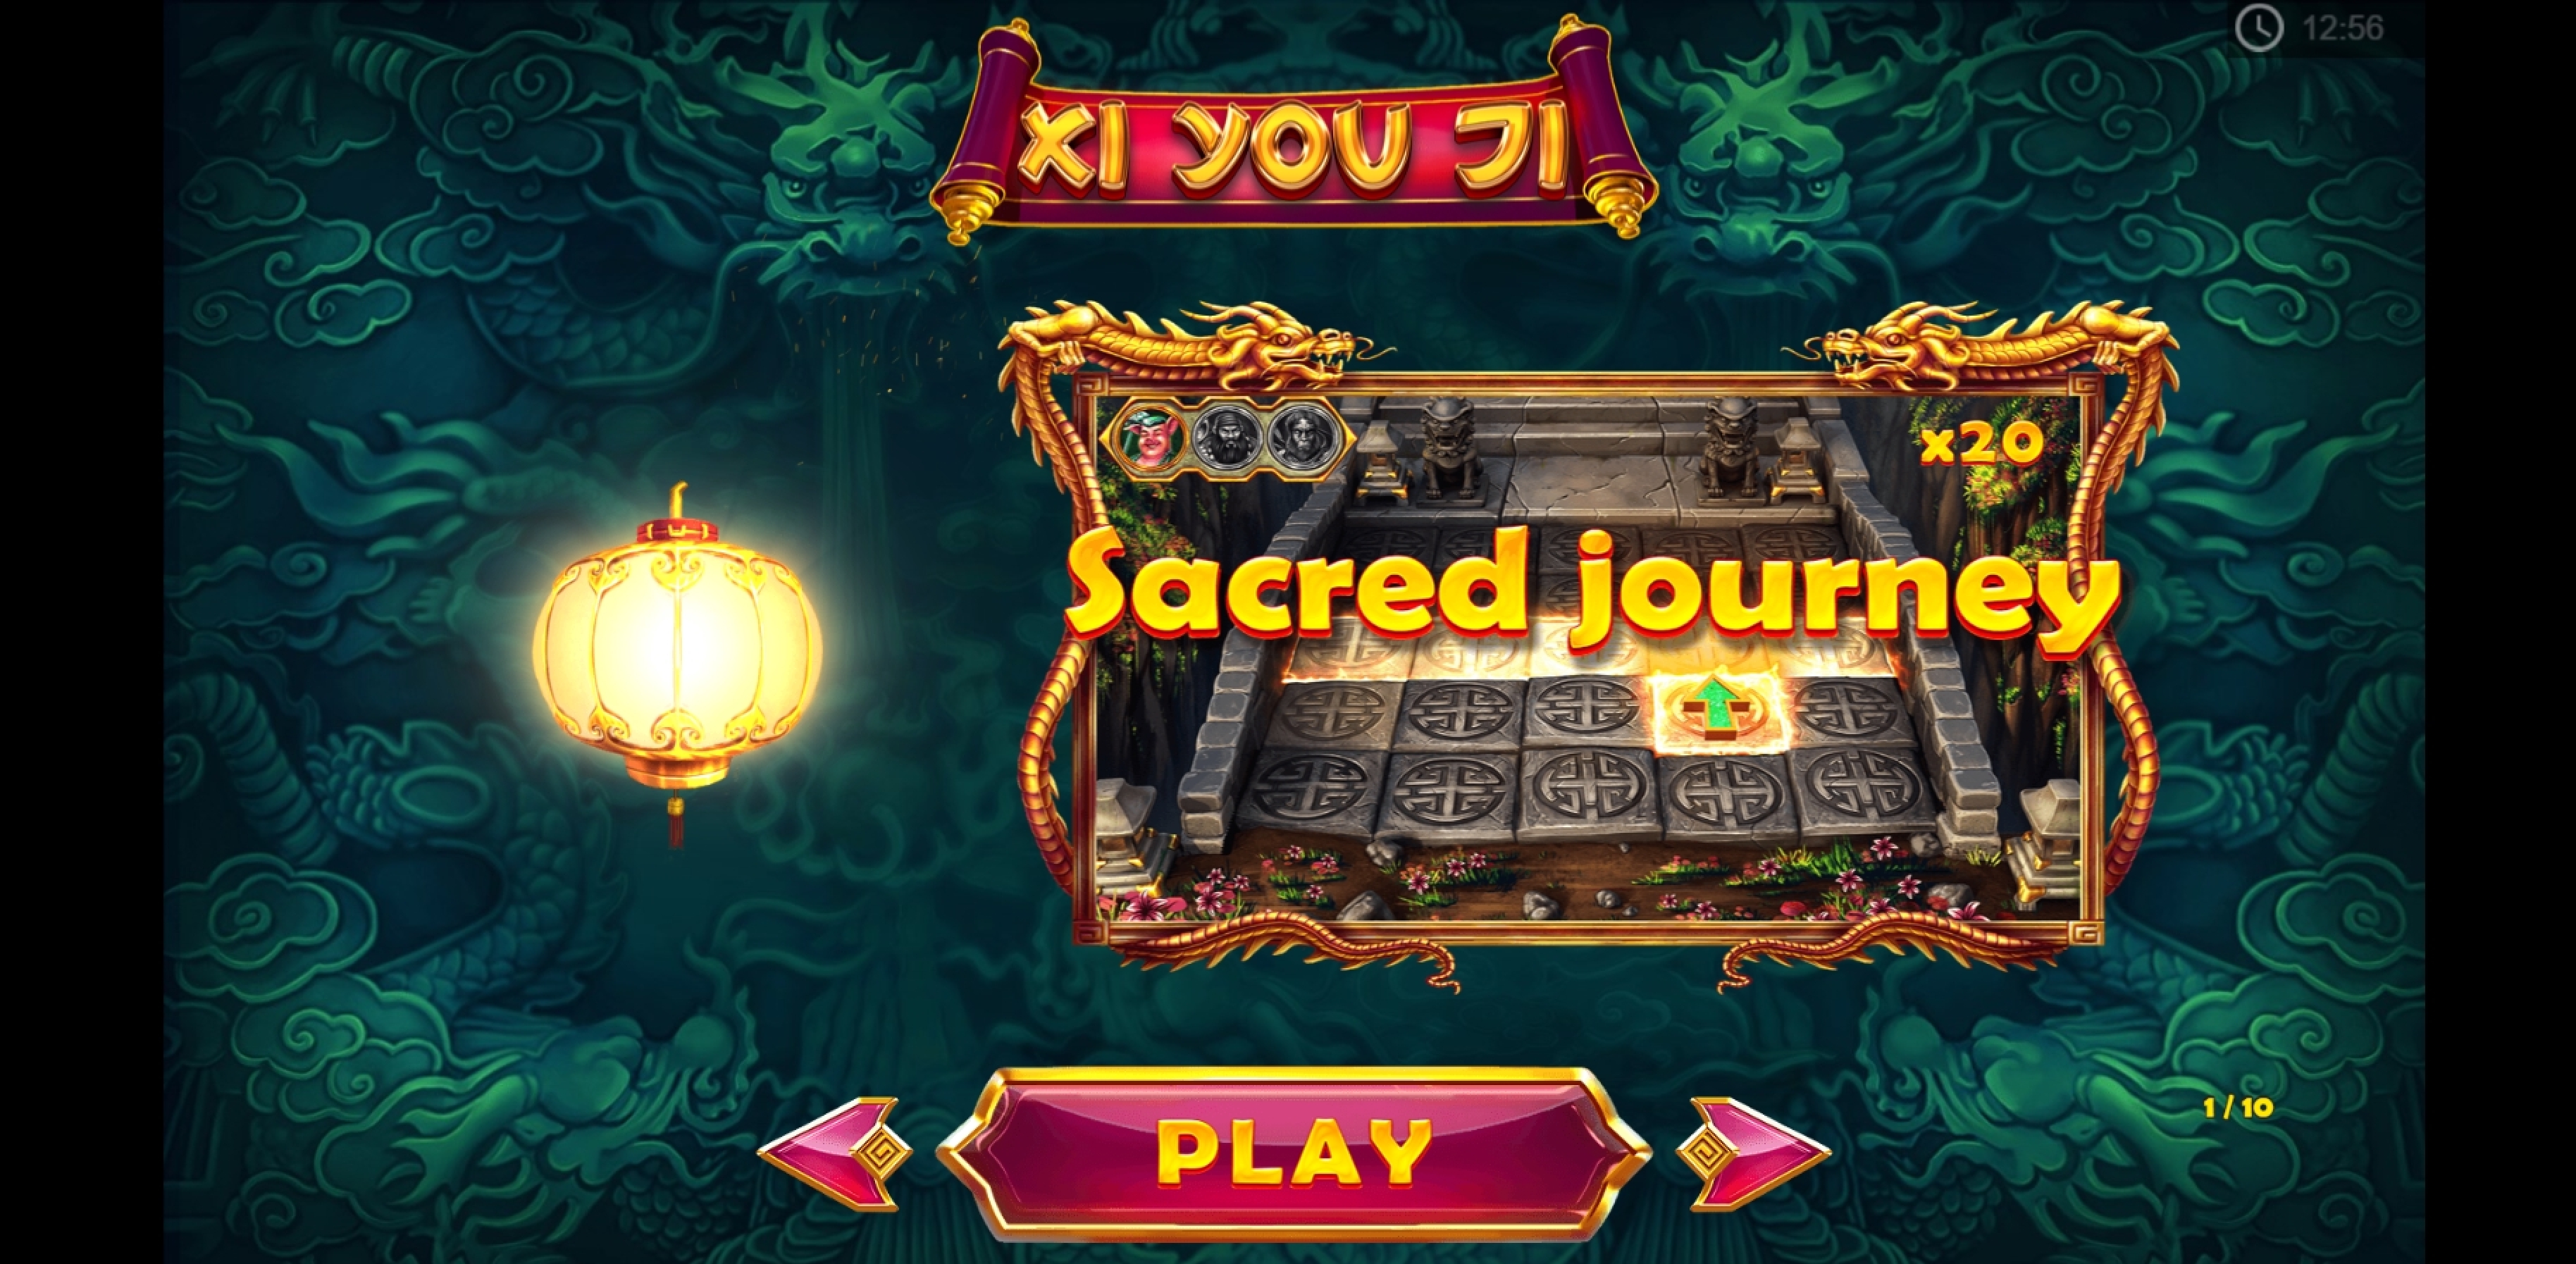 Play Xi You Ji Free Casino Slot Game by PariPlay